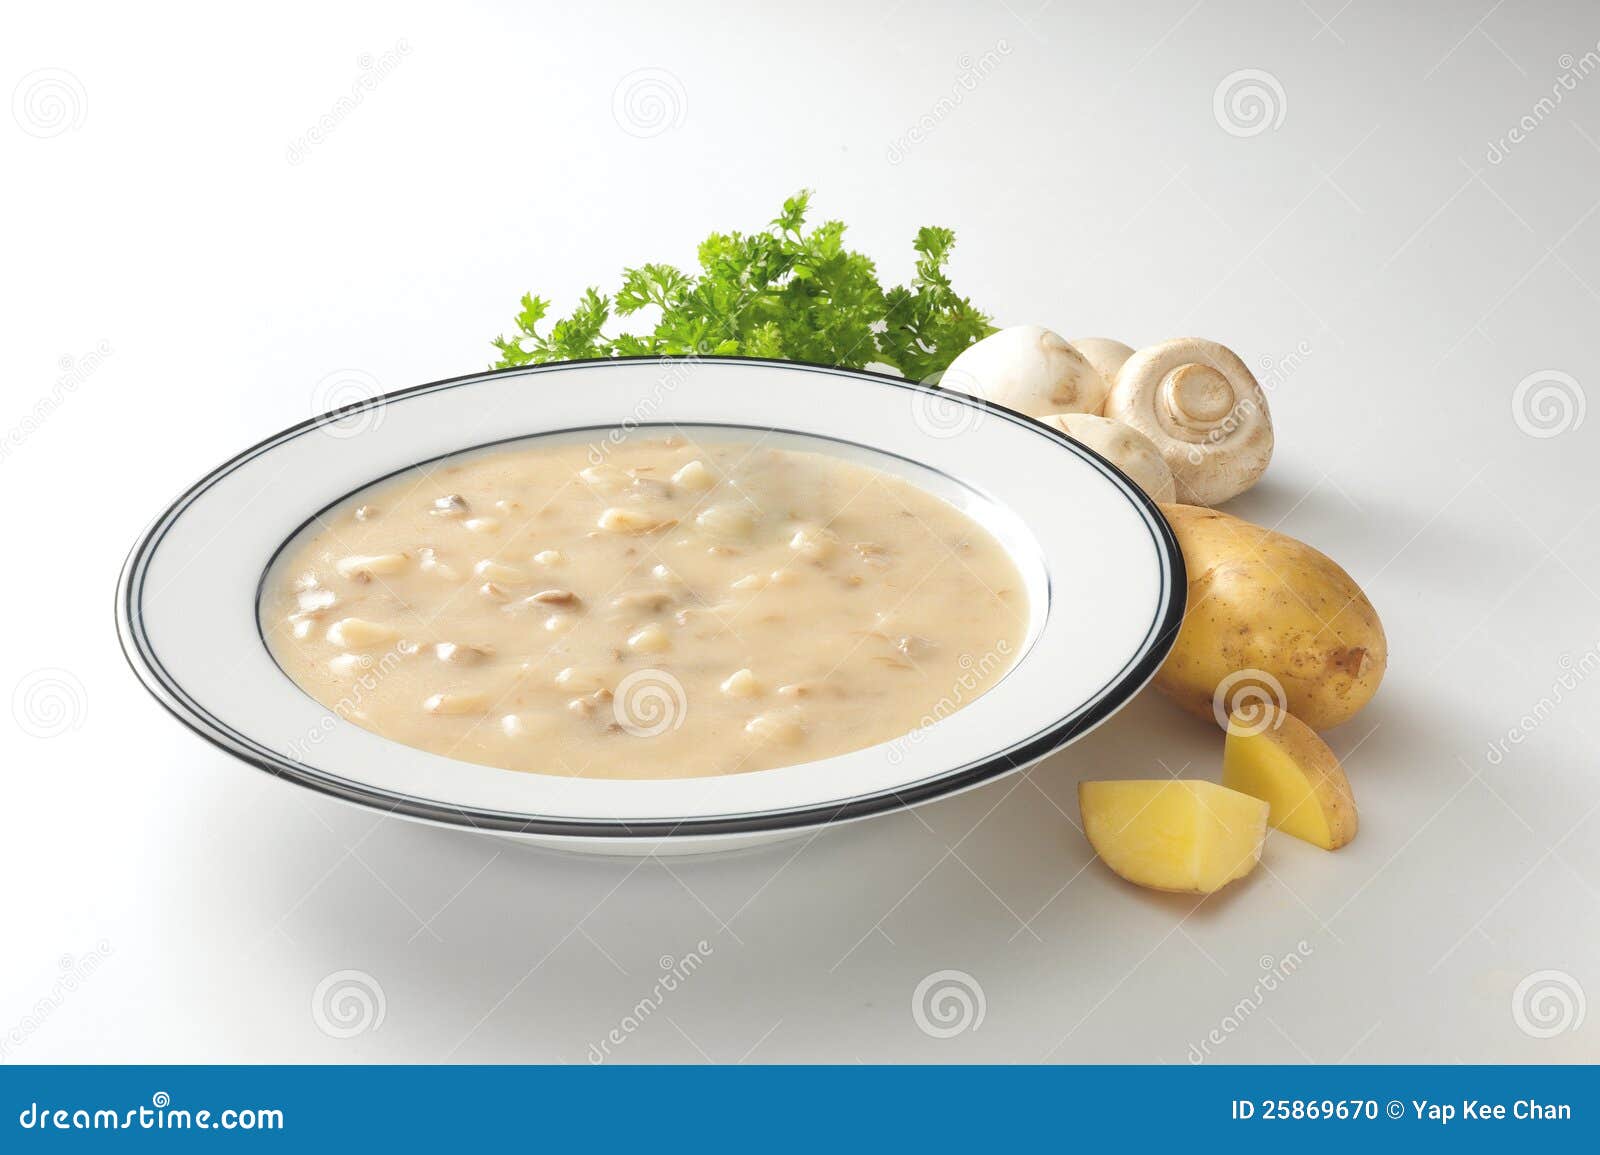 creamy potato mushroom soup